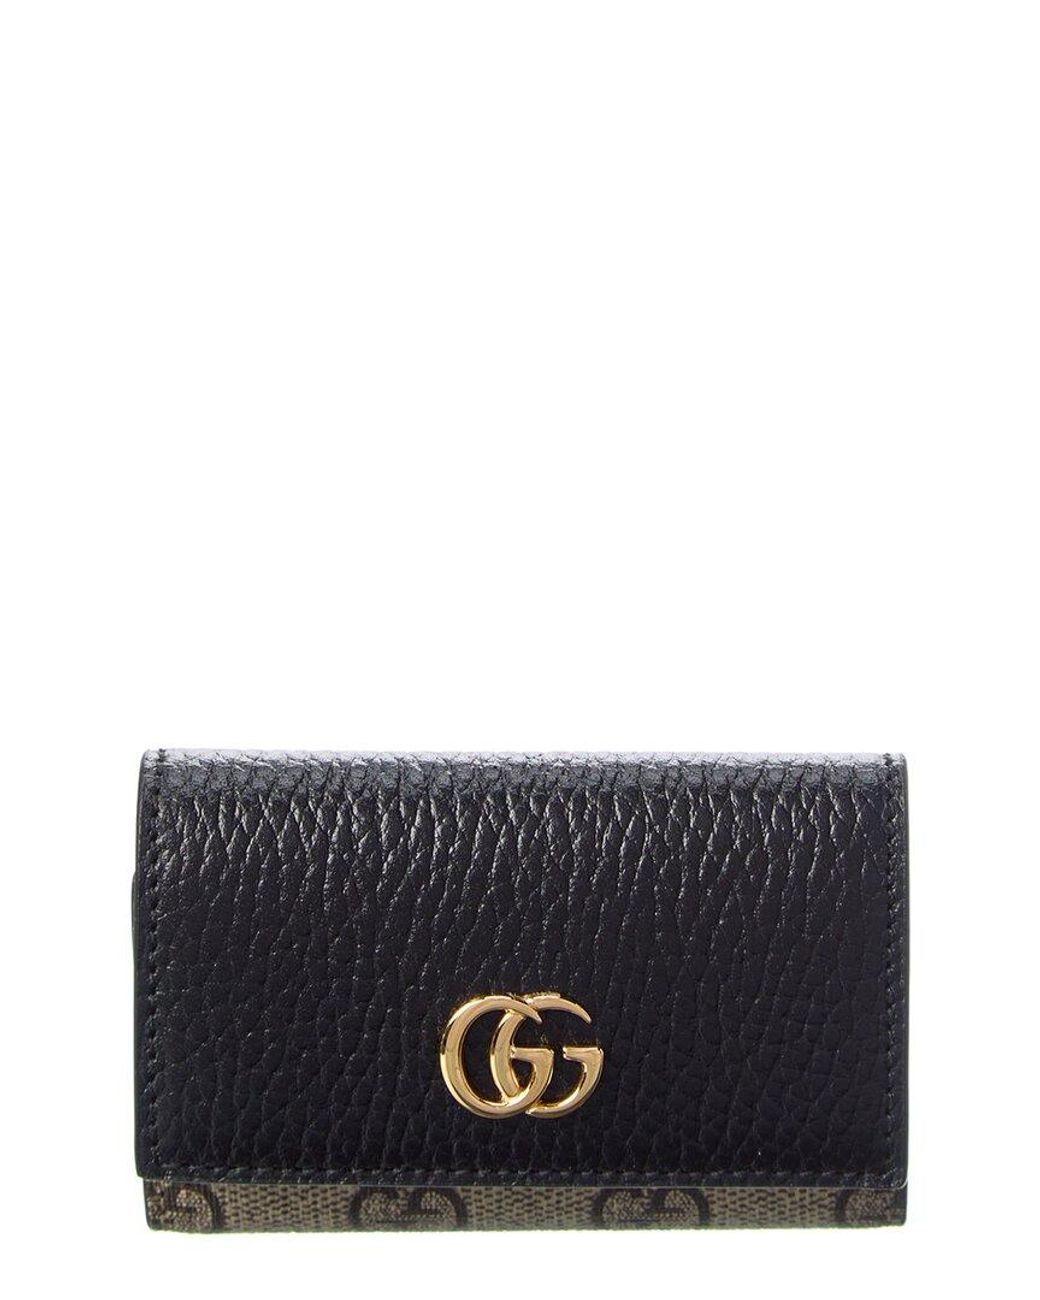 Gucci GG Marmont key case